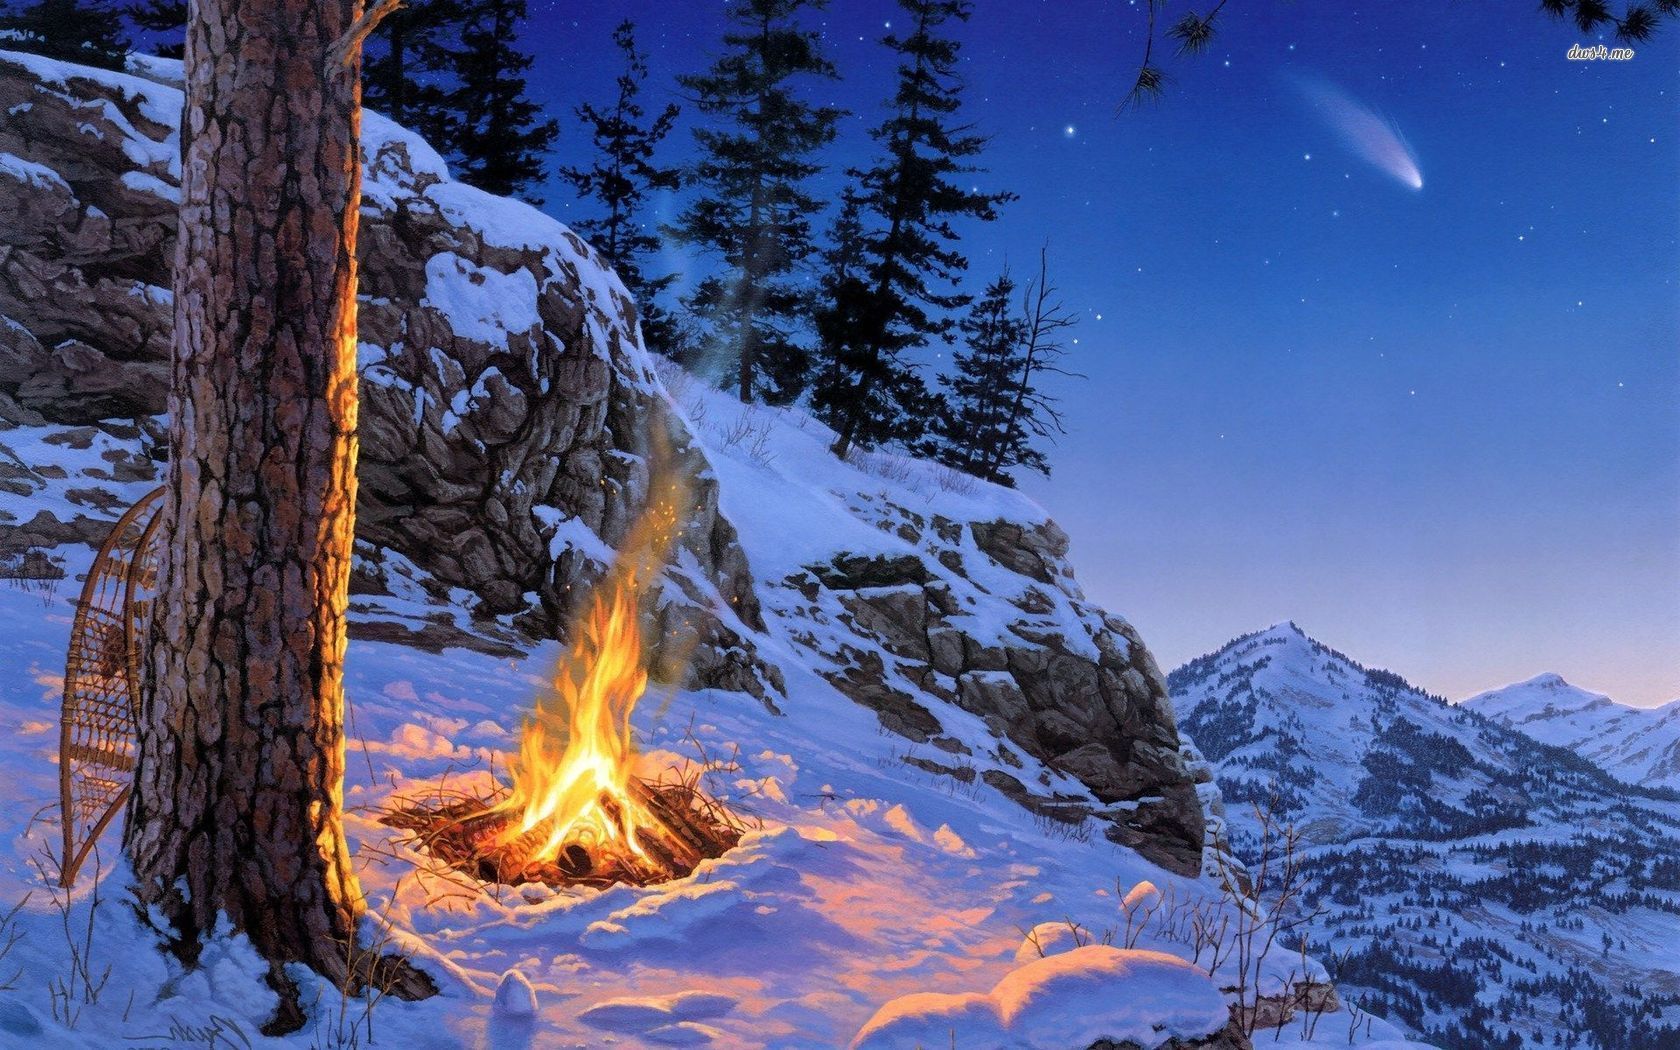 Bonfire on the mountain HD wallpaper. Mountain wallpaper, Photography wallpaper, Background desktop